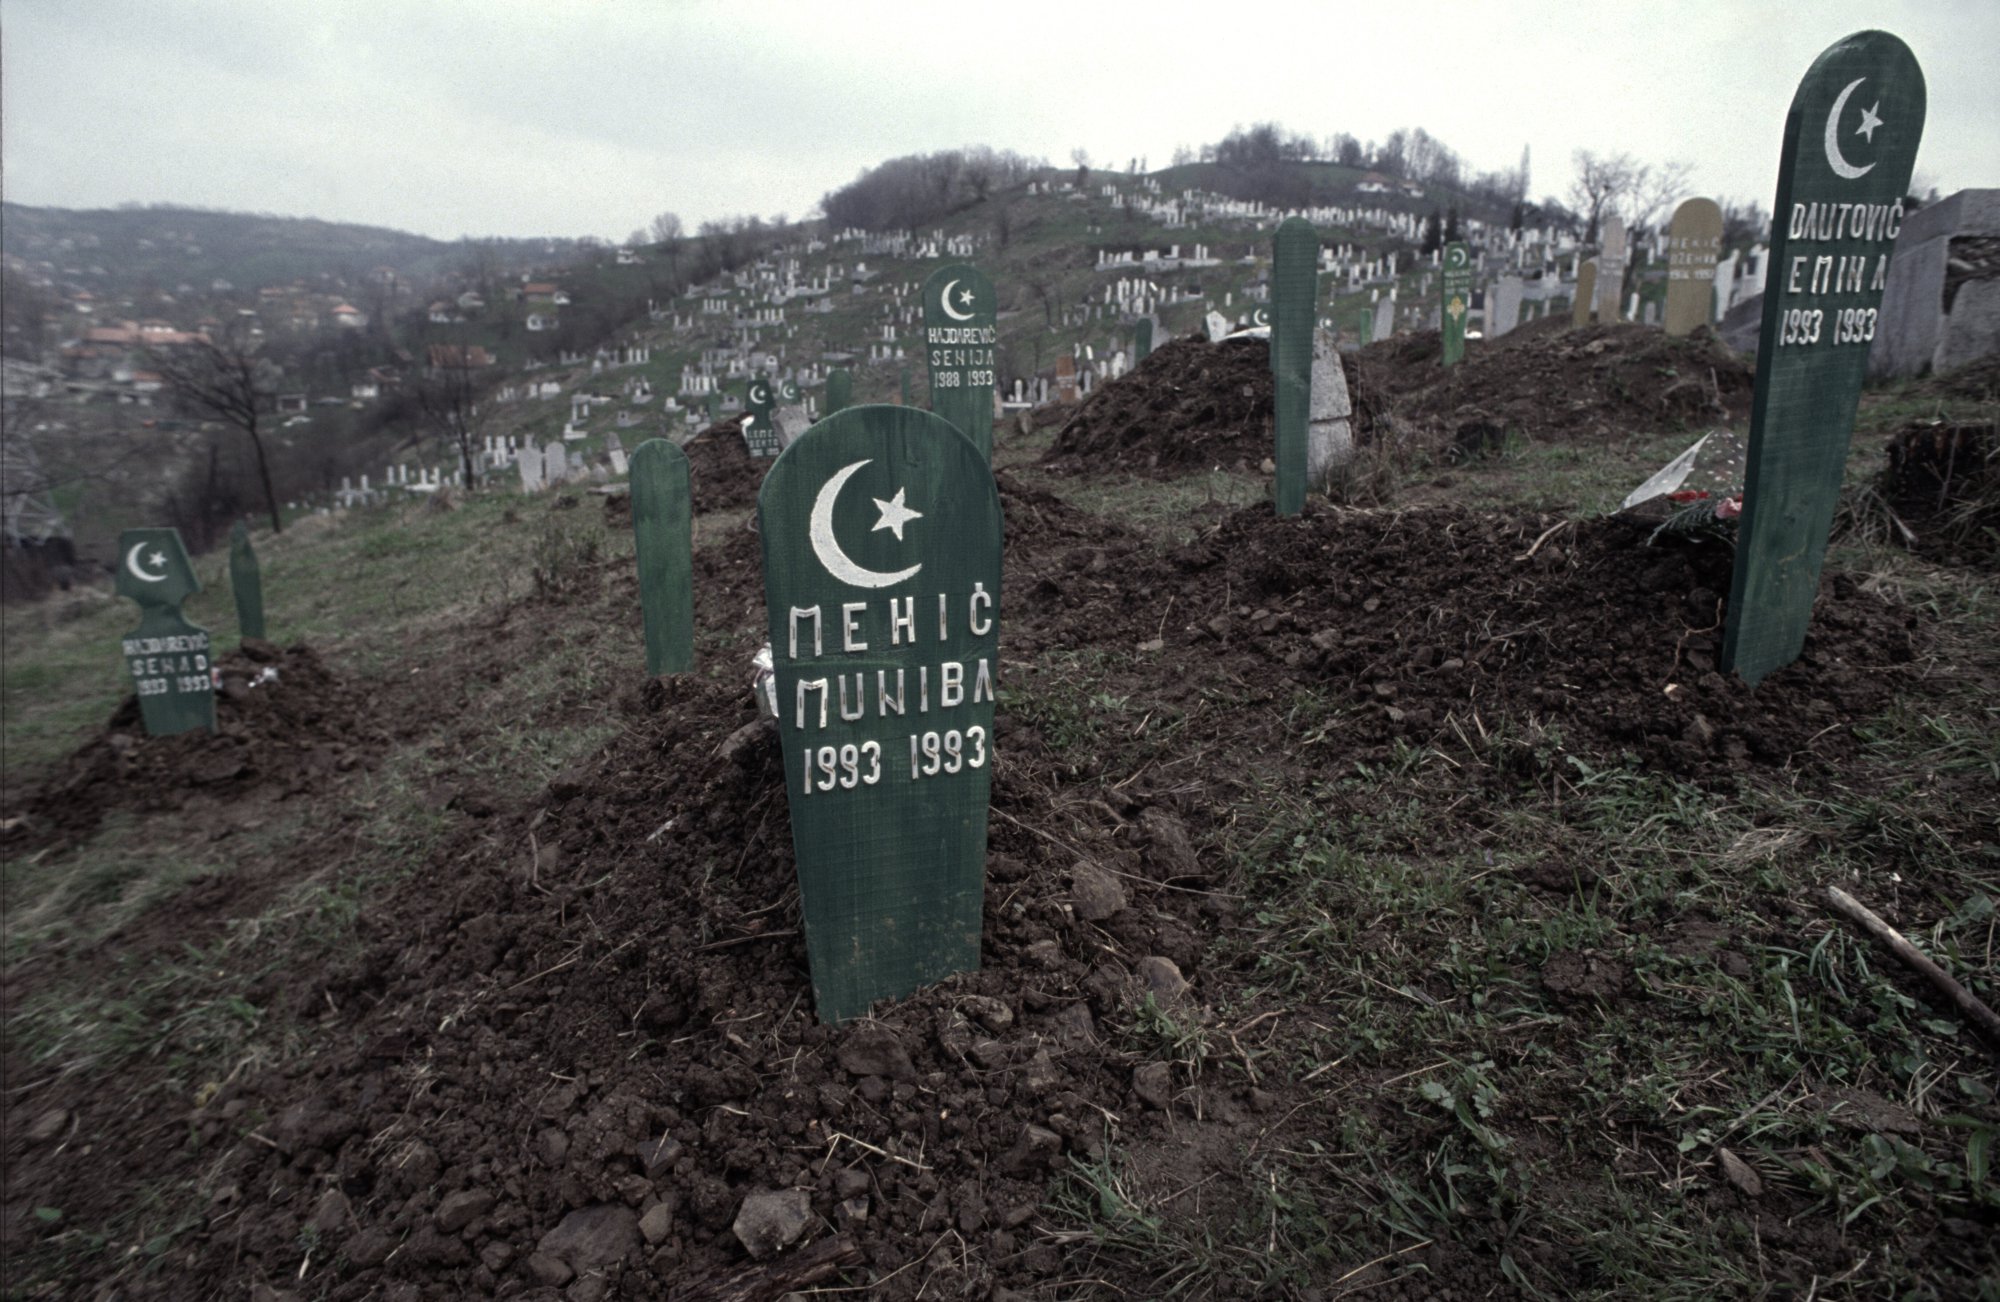  Infant war deaths. 1993 - 1993. Tusla cemetery, Bosnia, 1995 